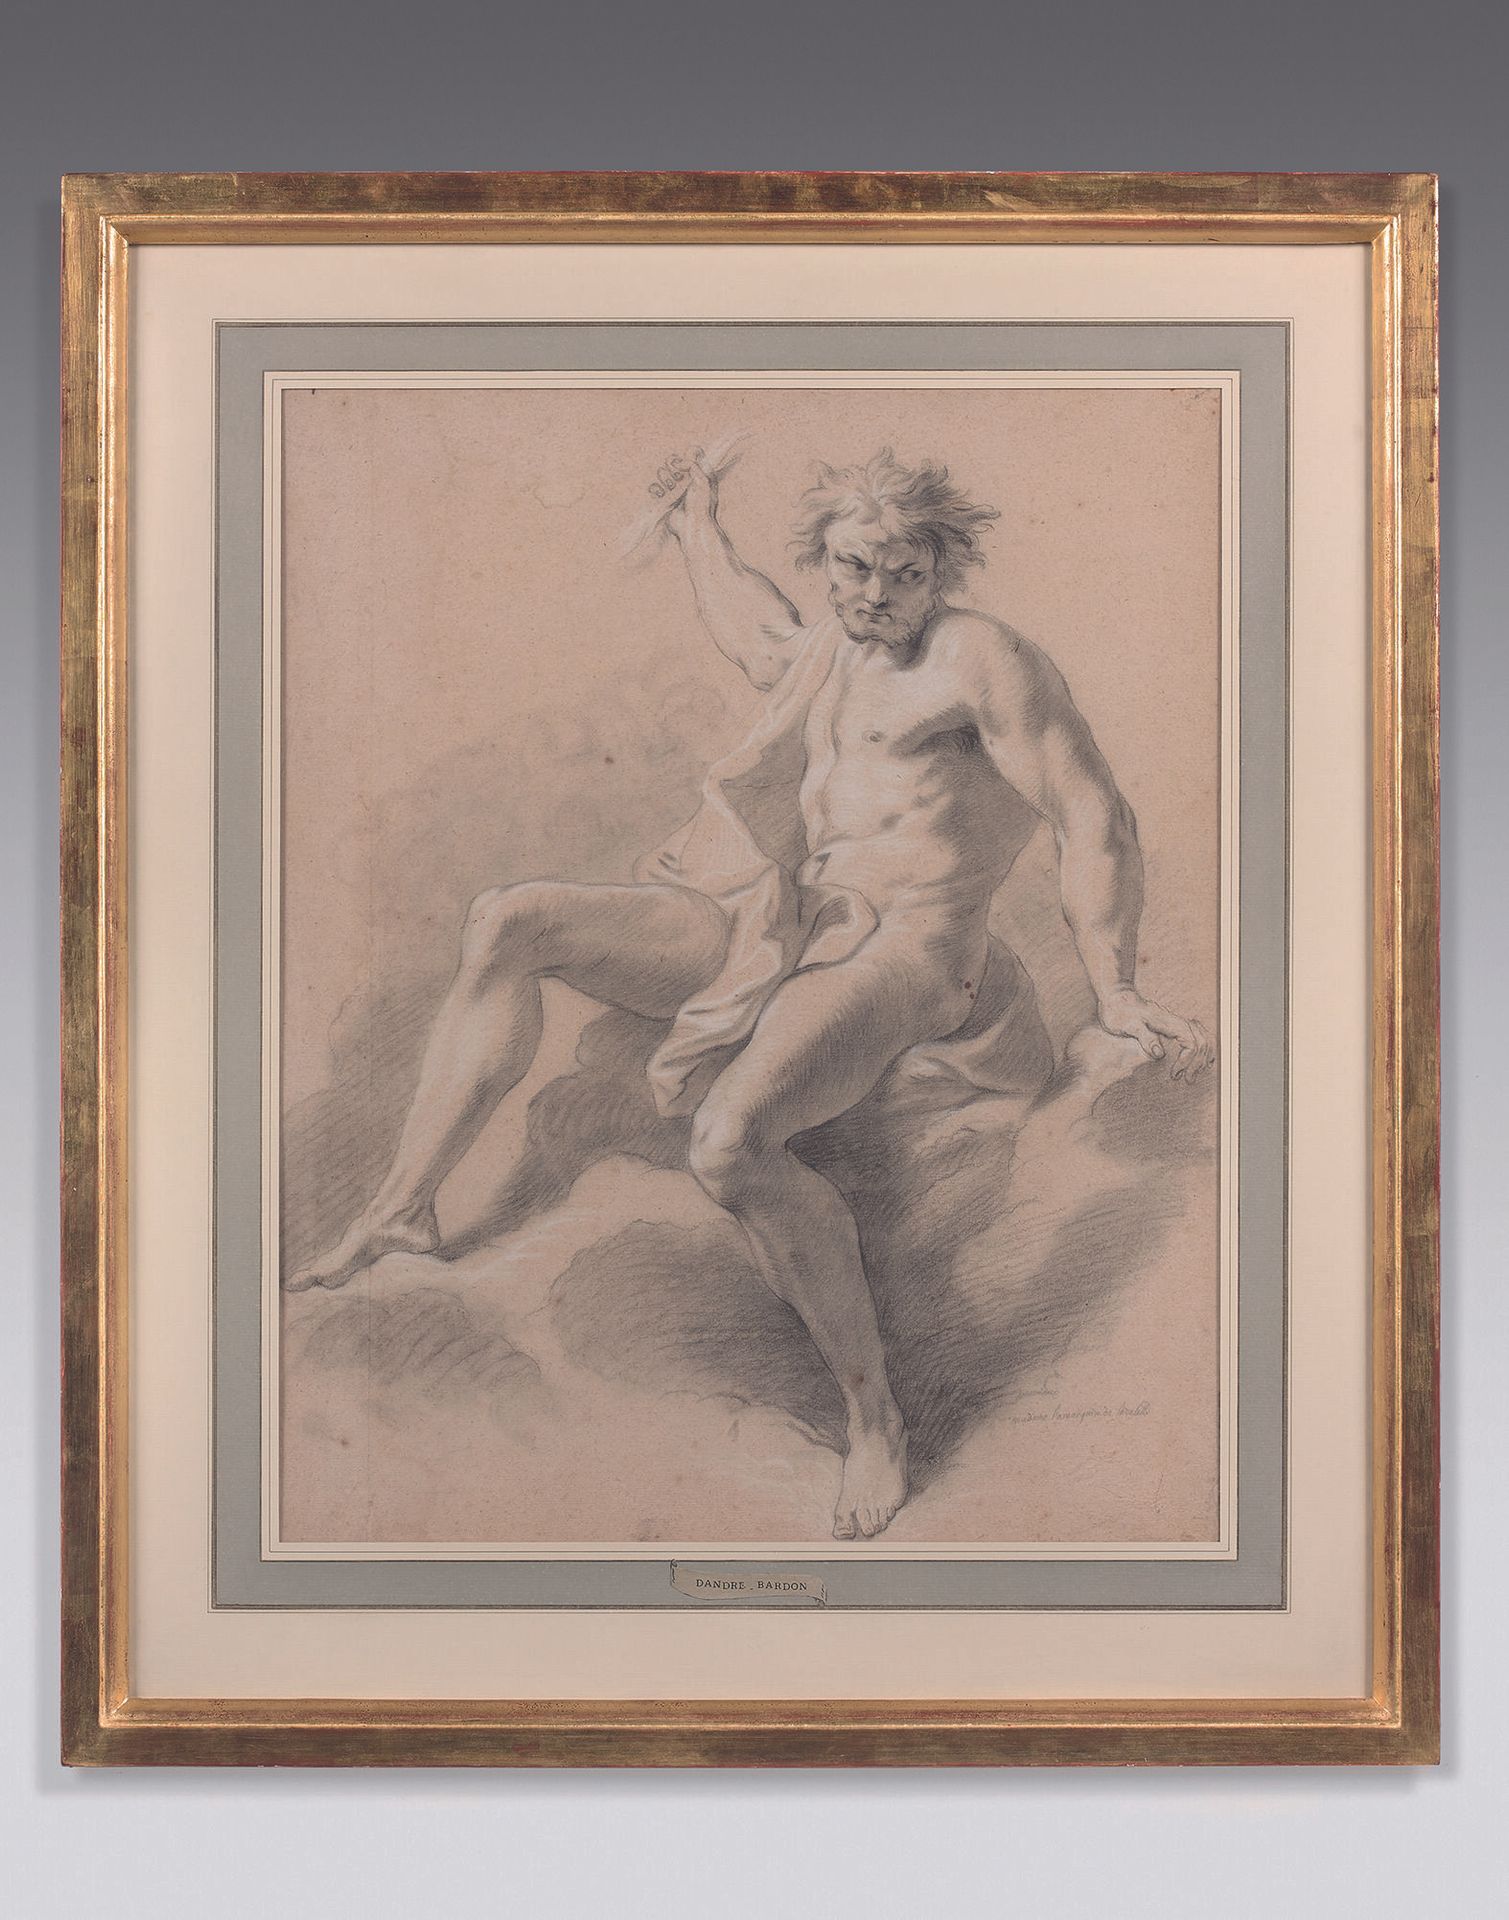 Null 归功于米歇尔-弗朗索瓦-丹德-巴顿（1700-1783）。
朱庇特像的研究 
黑色石头，白色亮点。 
52,7 x 42,6 cm
右下角有注解："M&hellip;